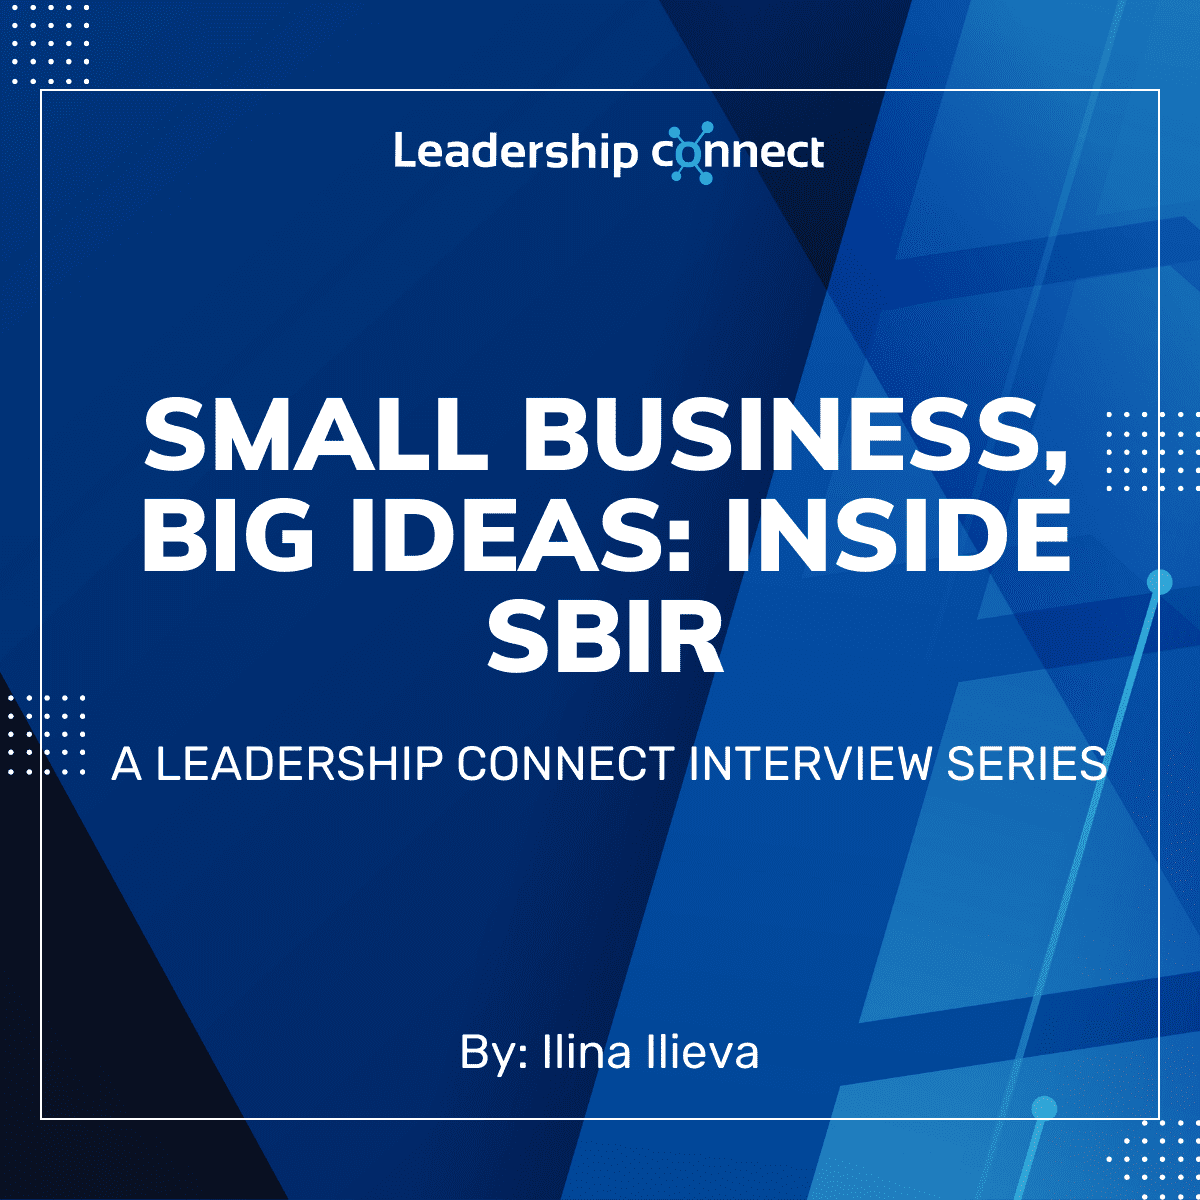 Small Business, Big Ideas: Inside SBIR